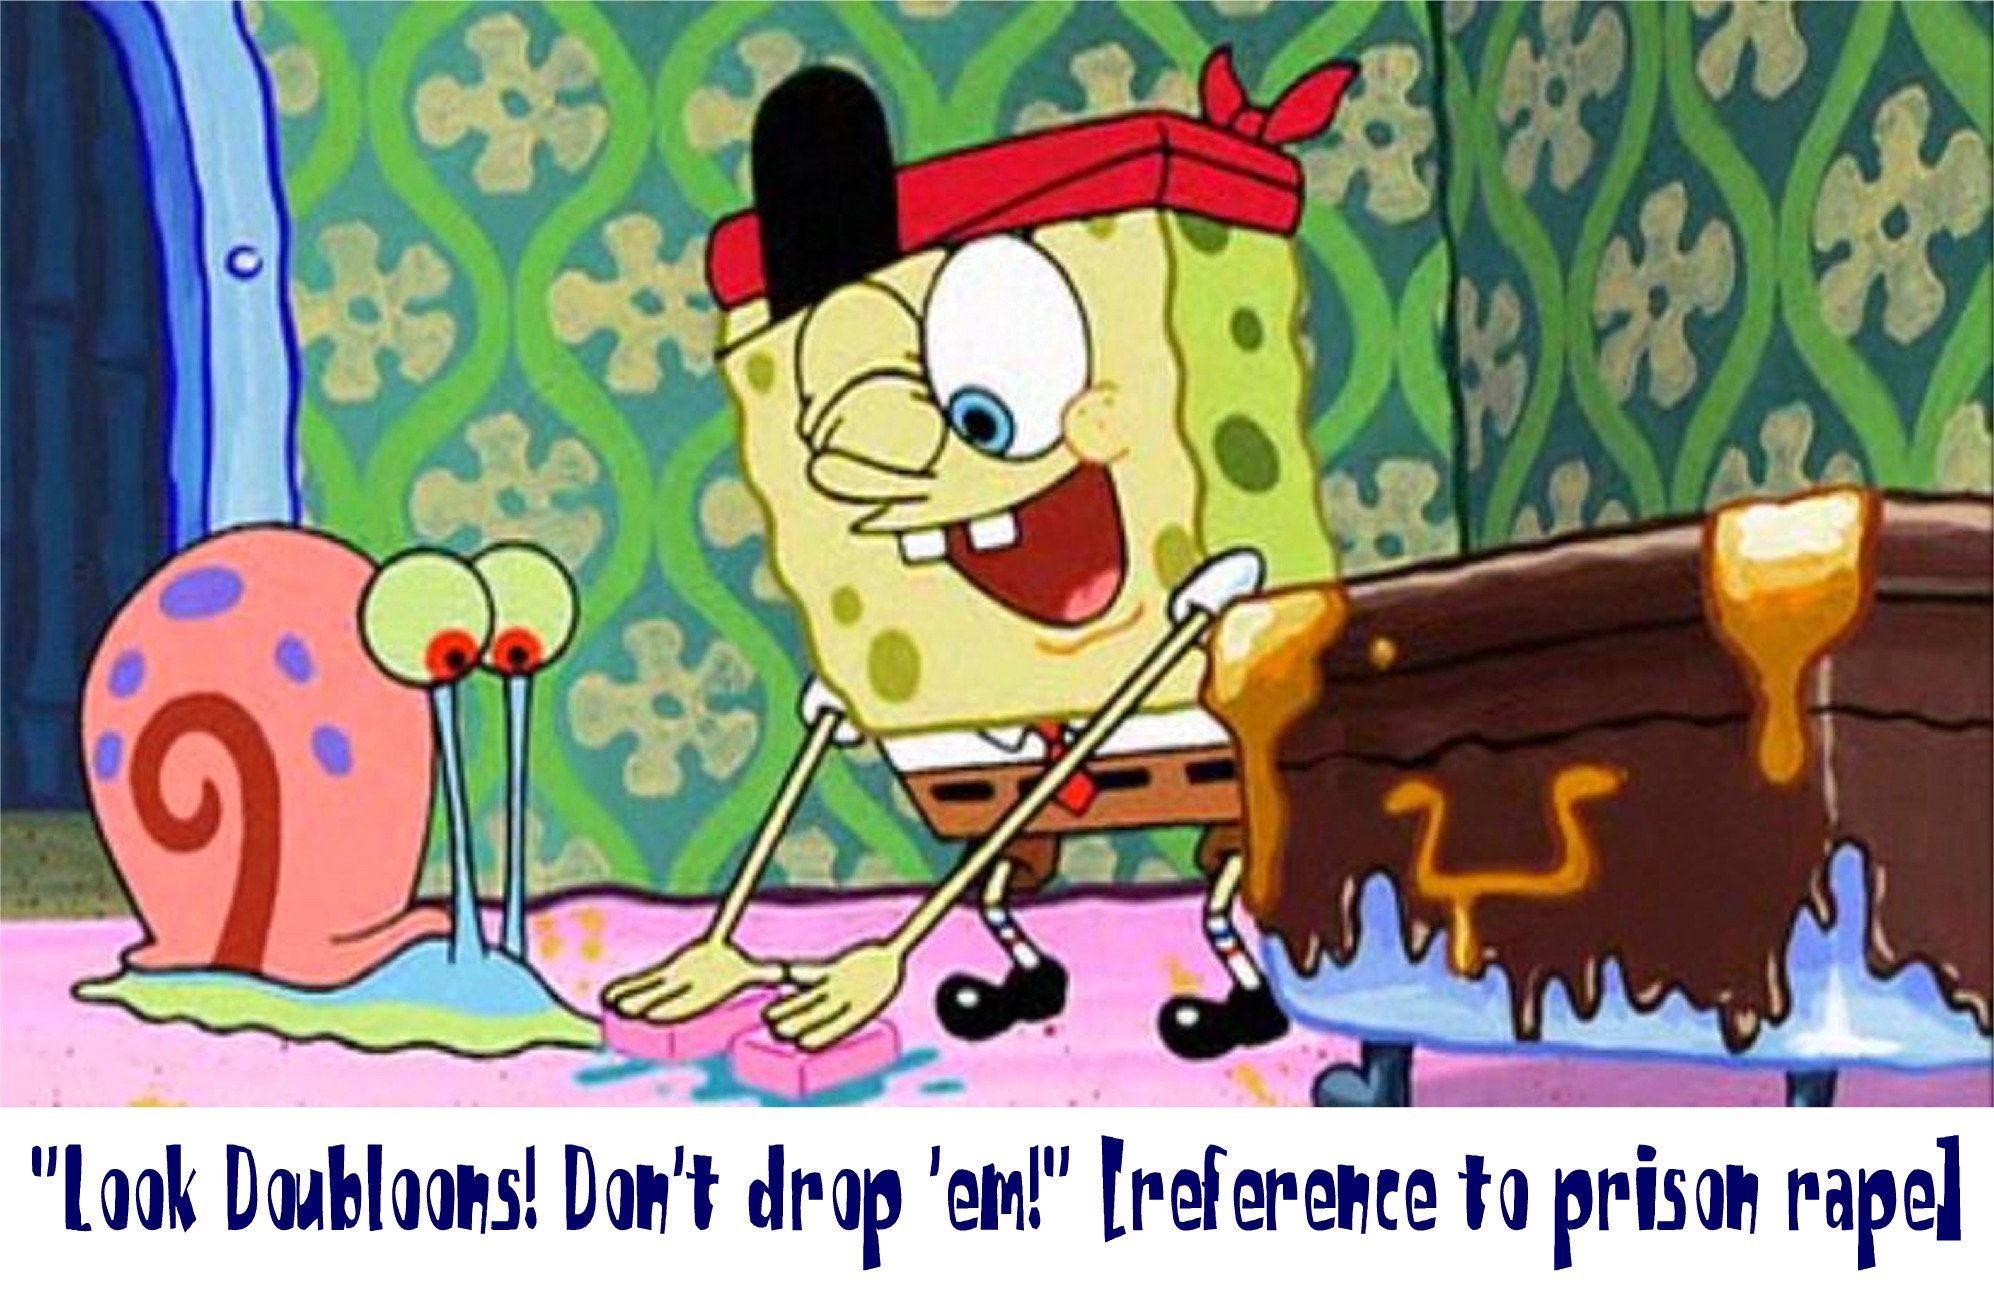 spongebob sex jokes - "Look Doubloons! Don't drop 'em!" reference to prison rapel